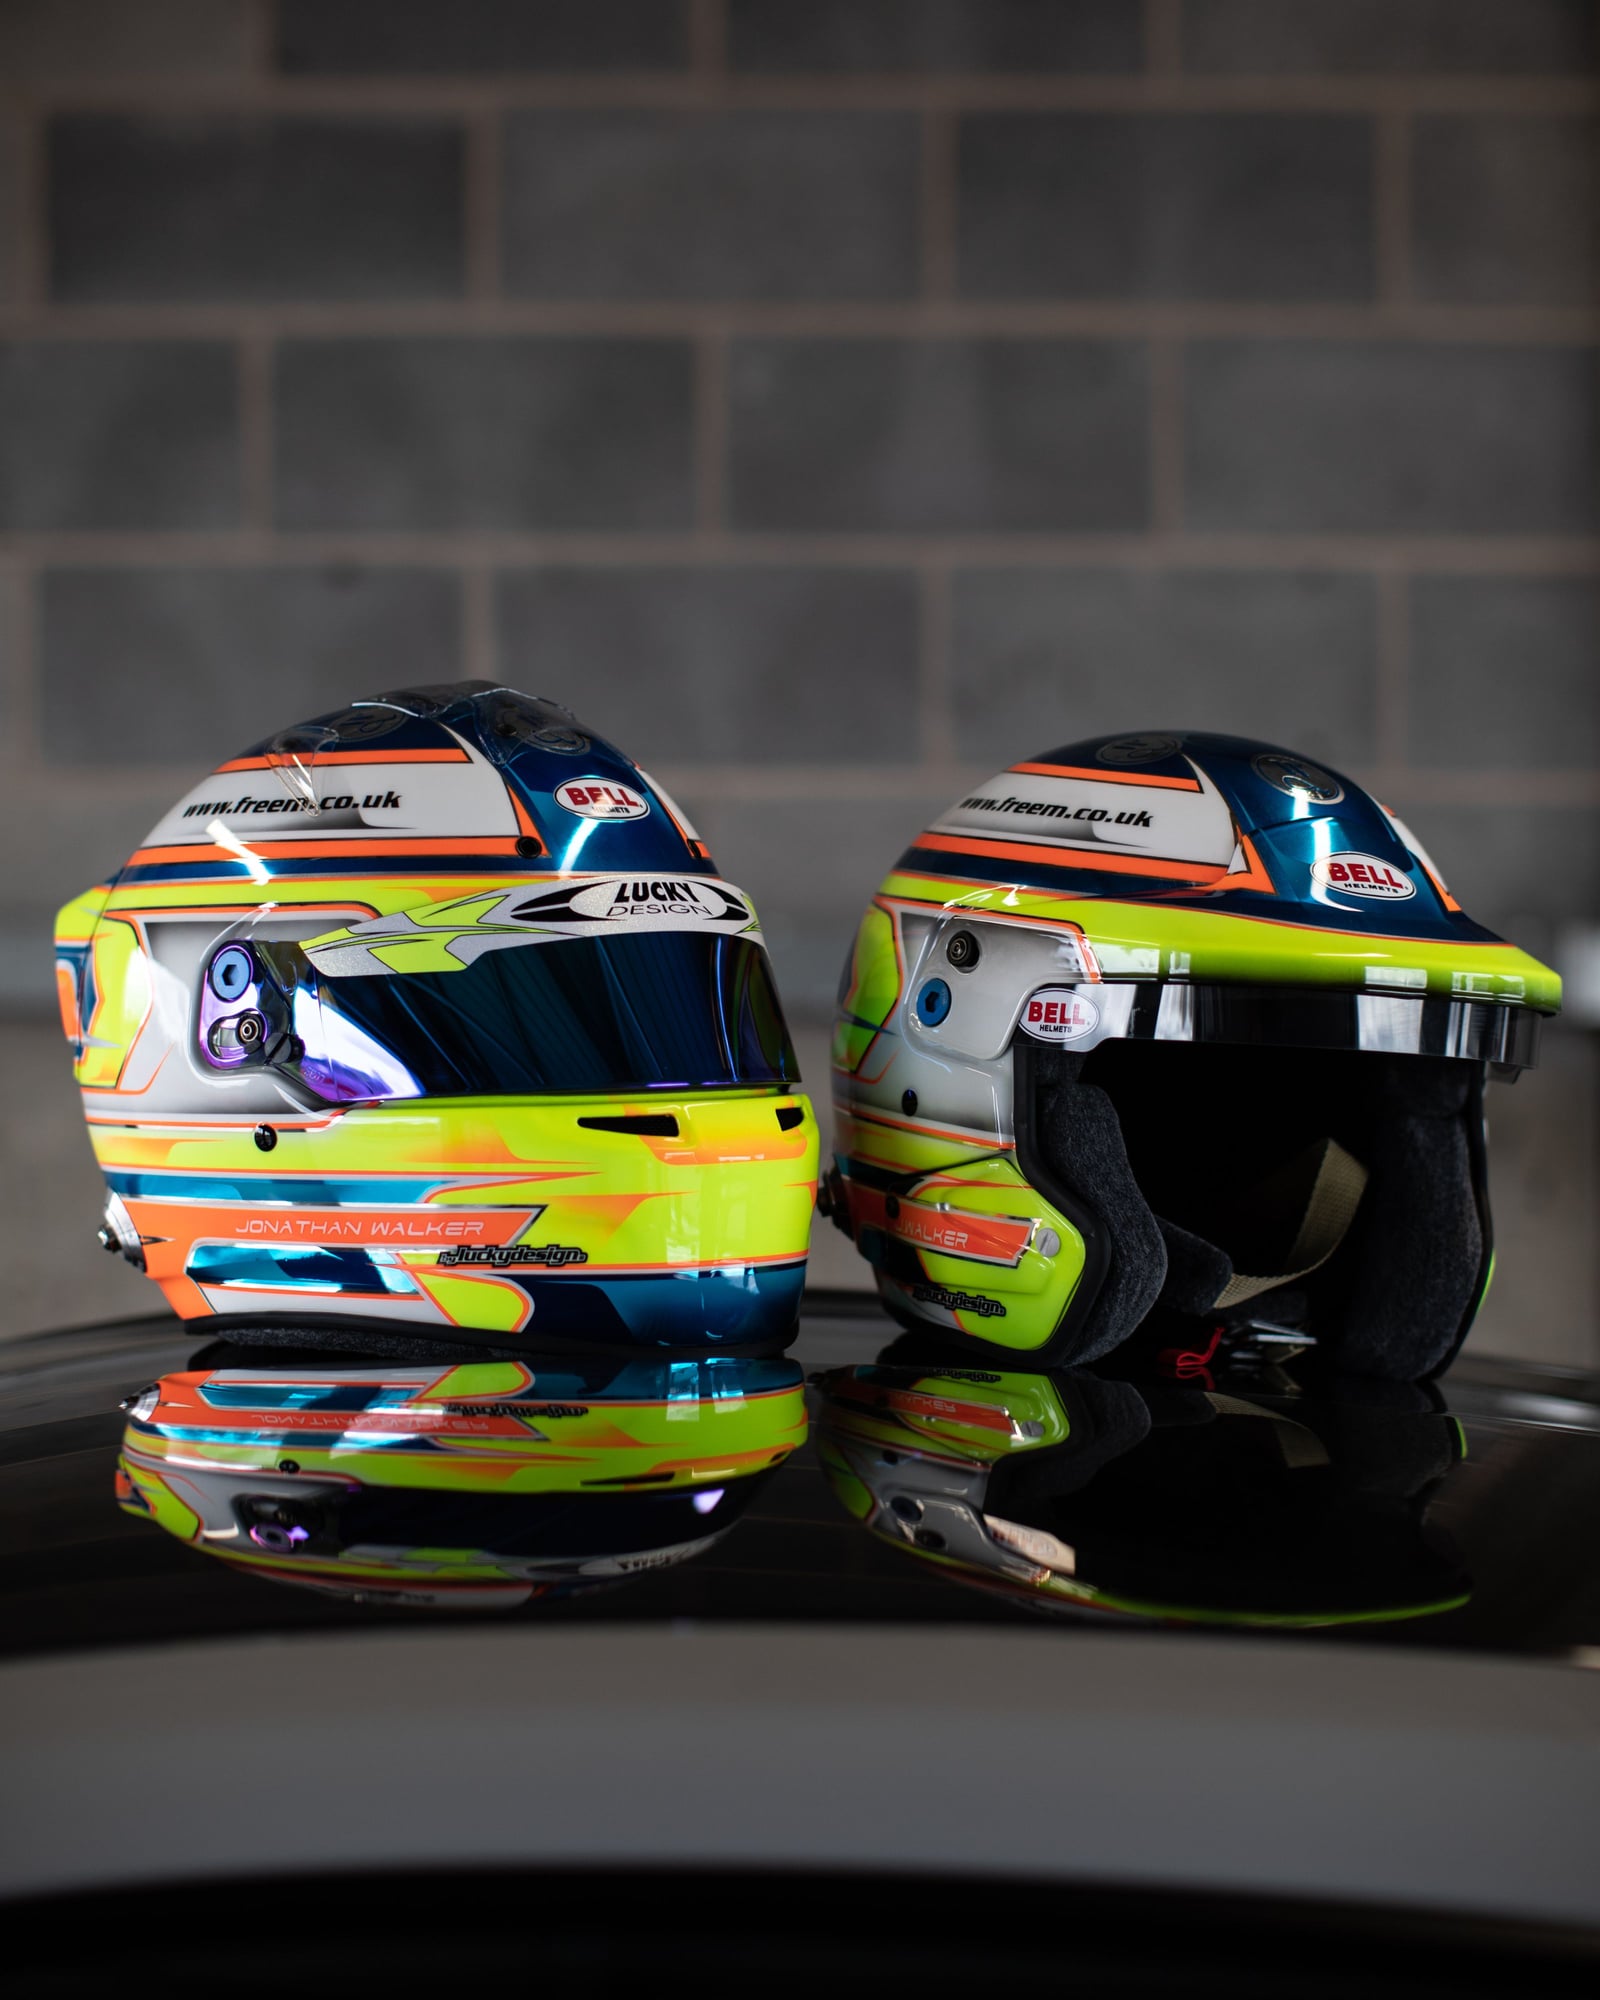 Helmet for track events - Rennlist - Porsche Discussion Forums